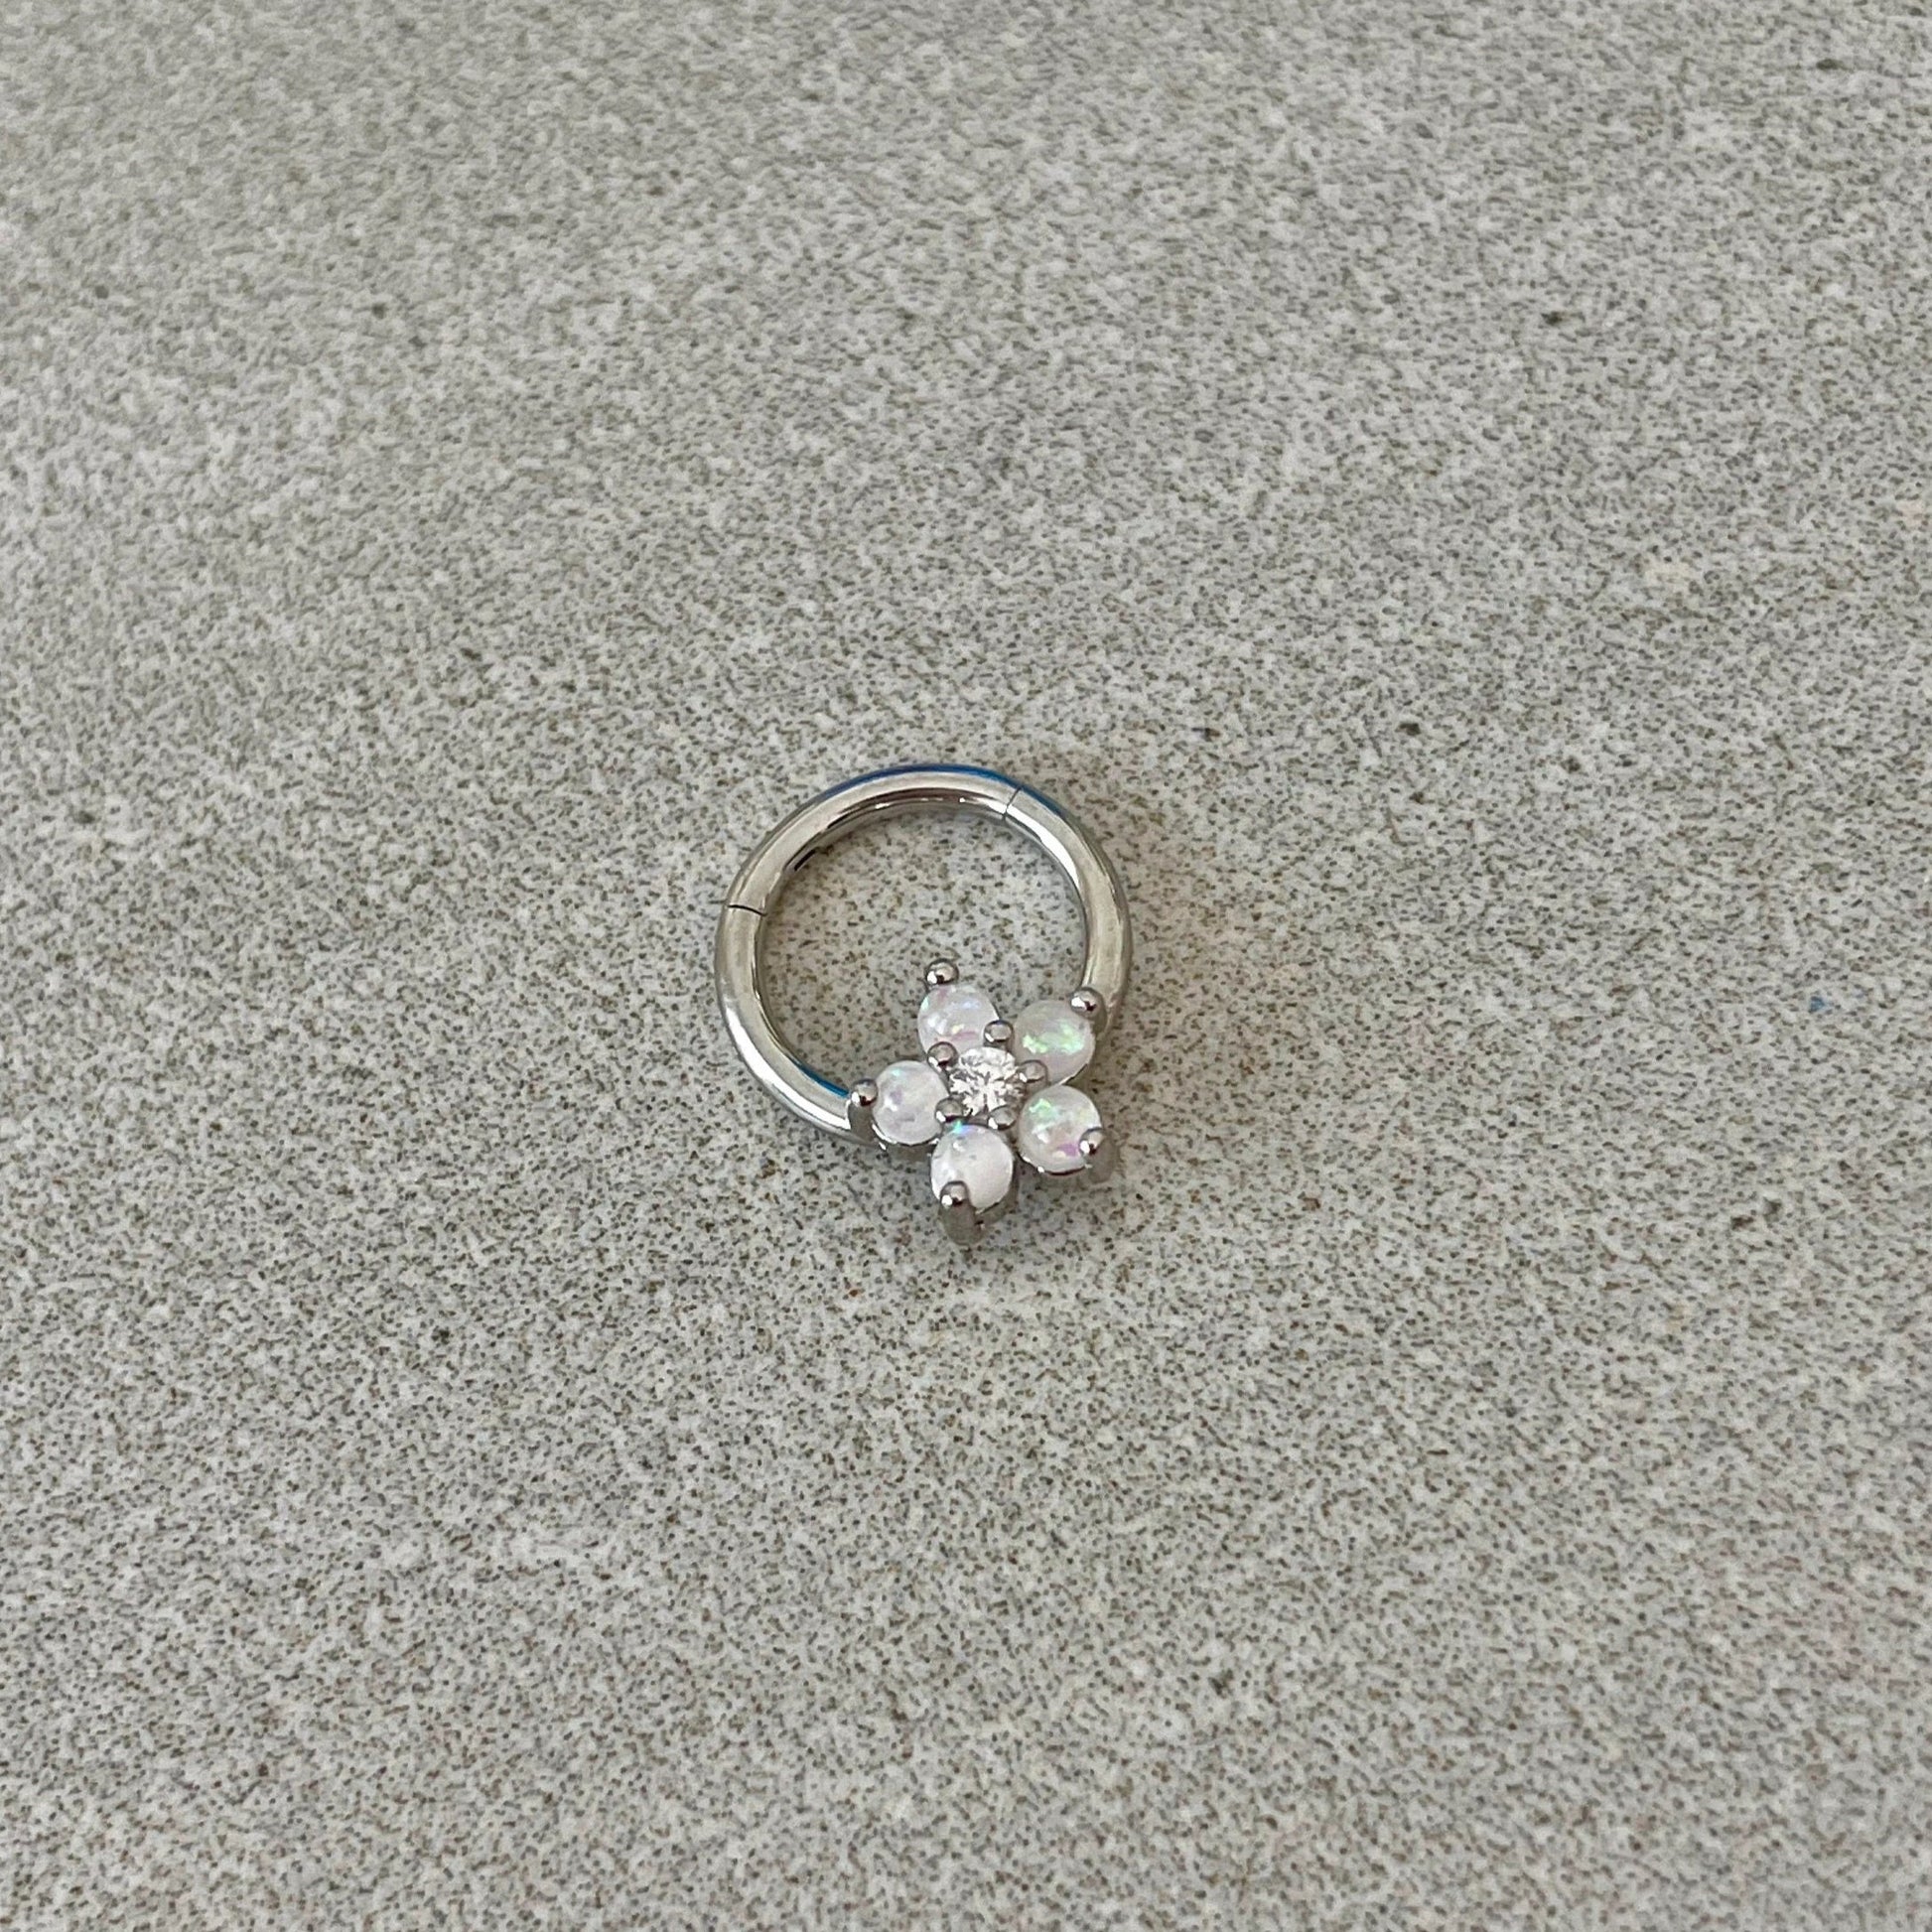 Silver Opal Flower Daith Earring (16G, 8mm, Surgical Steel)